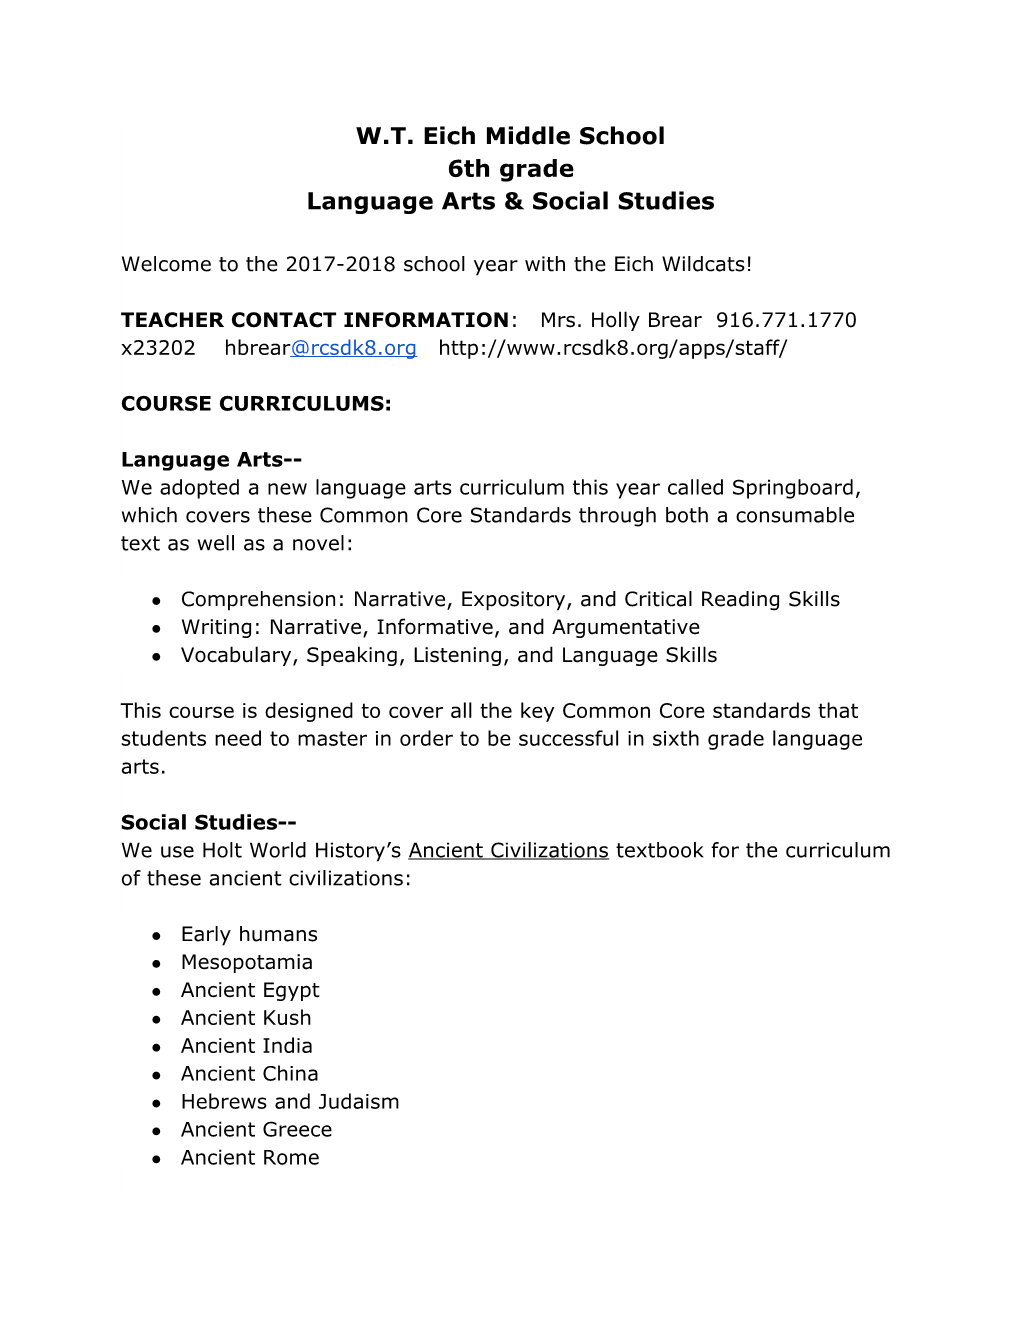 Language Arts & Social Studies